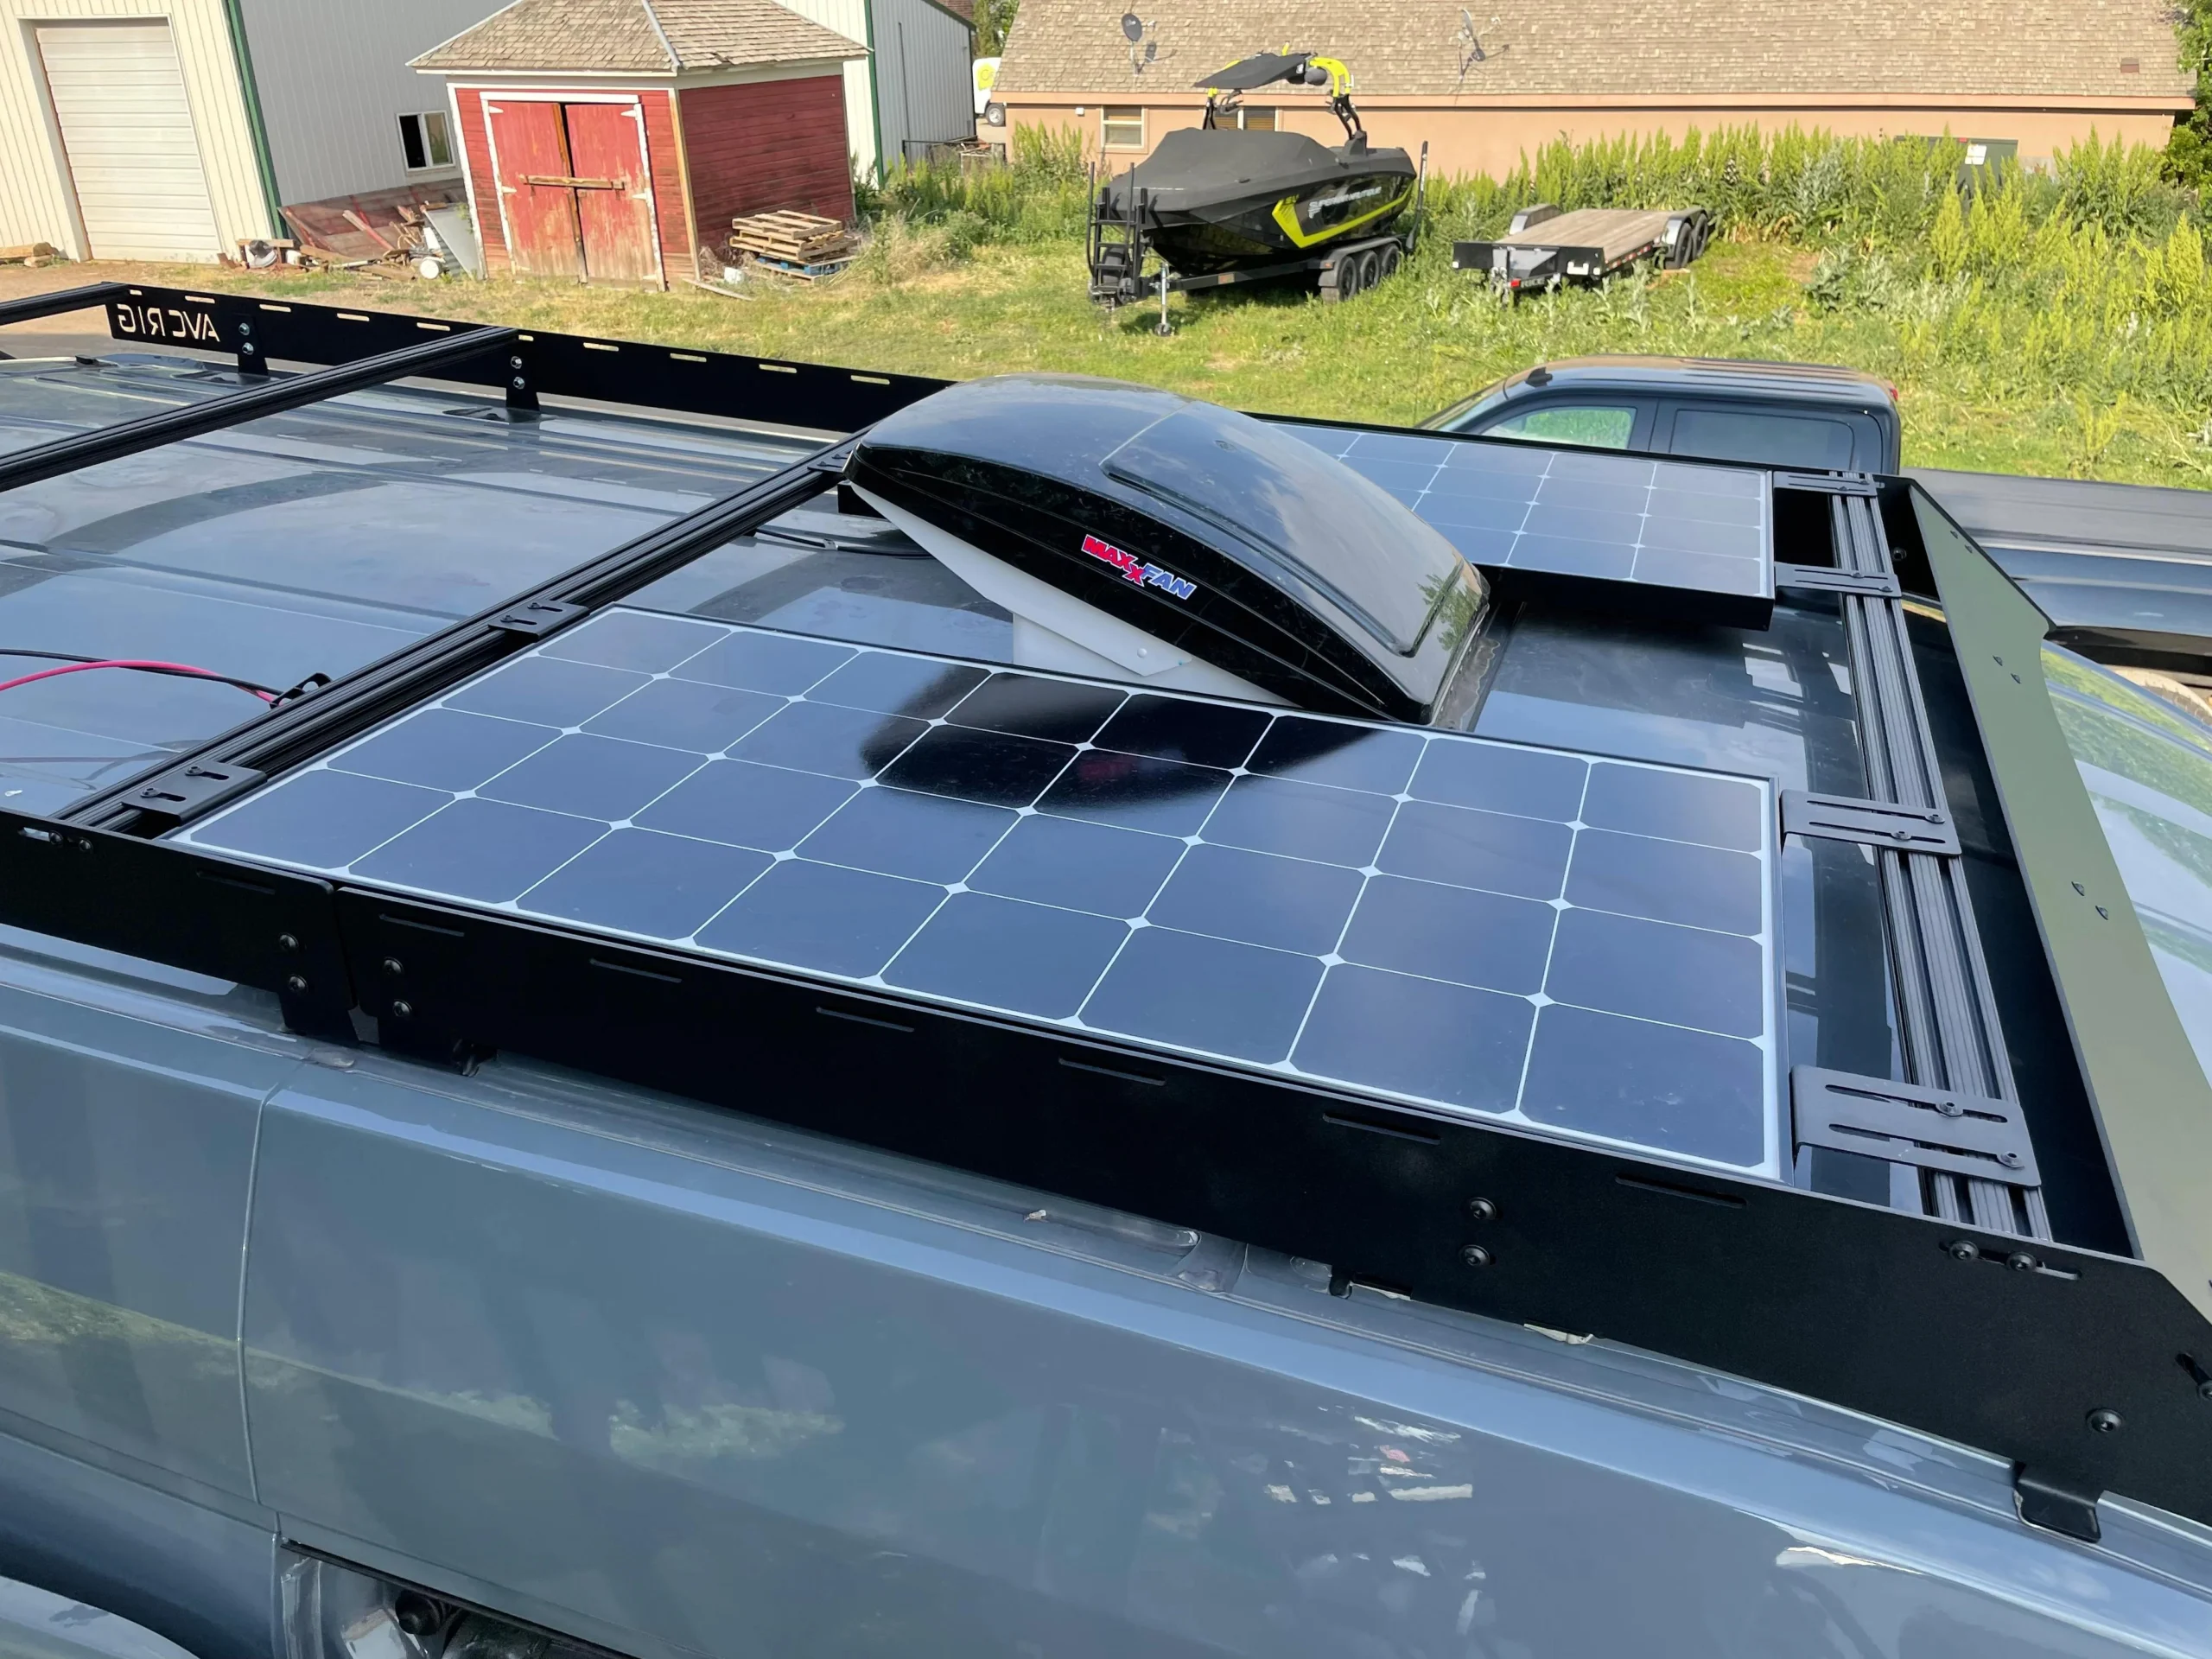 roof rack solar panel - Can I mount solar panels on roof rack